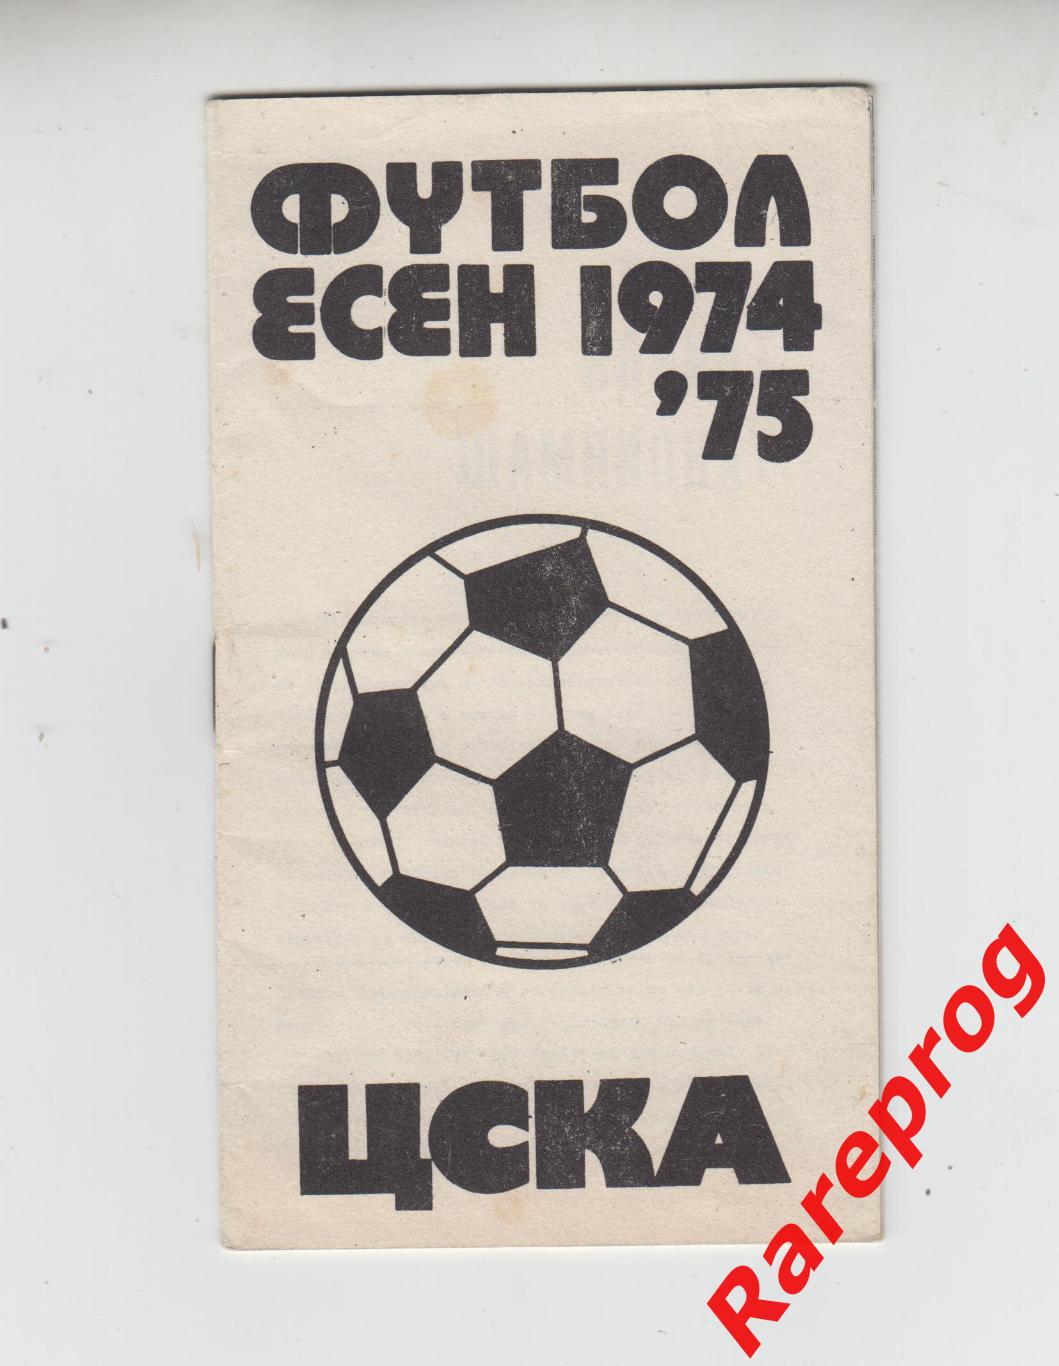 календарь -справочник ЦСКА София Болгария сезон 1974 / 1975